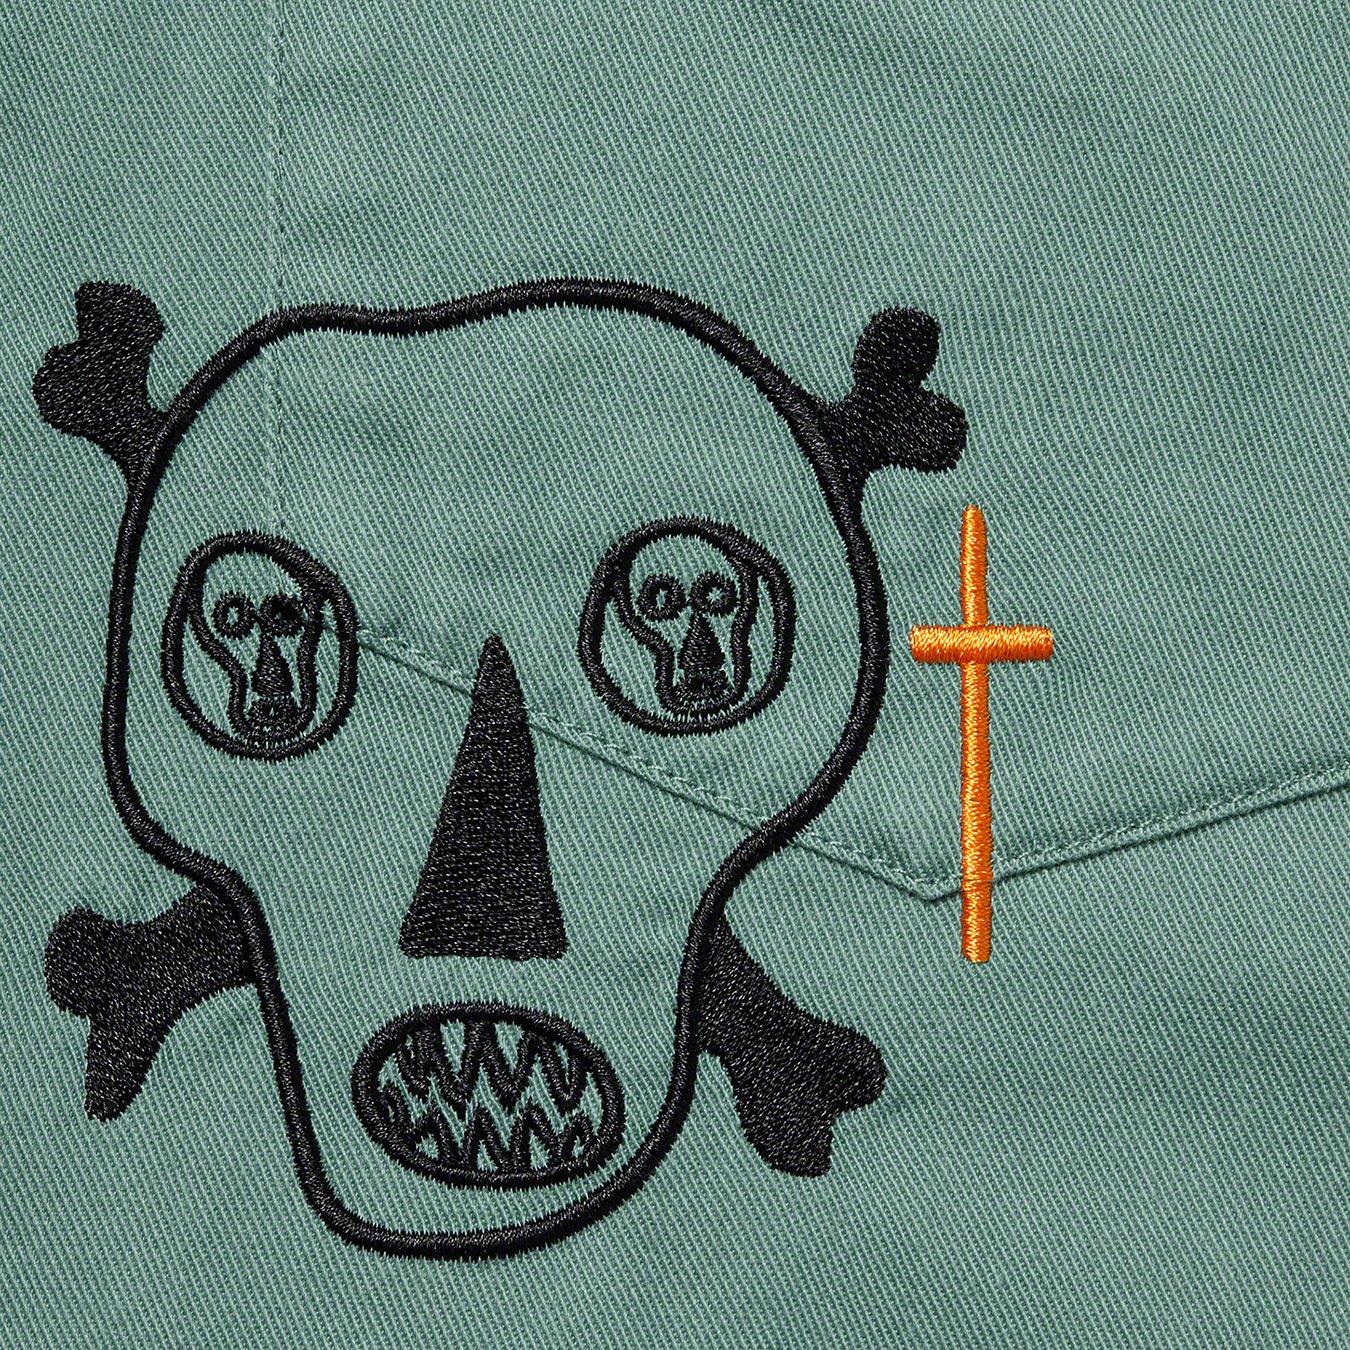 Clayton Patterson/Supreme Skulls Embroidered Work Shirt - Supreme 